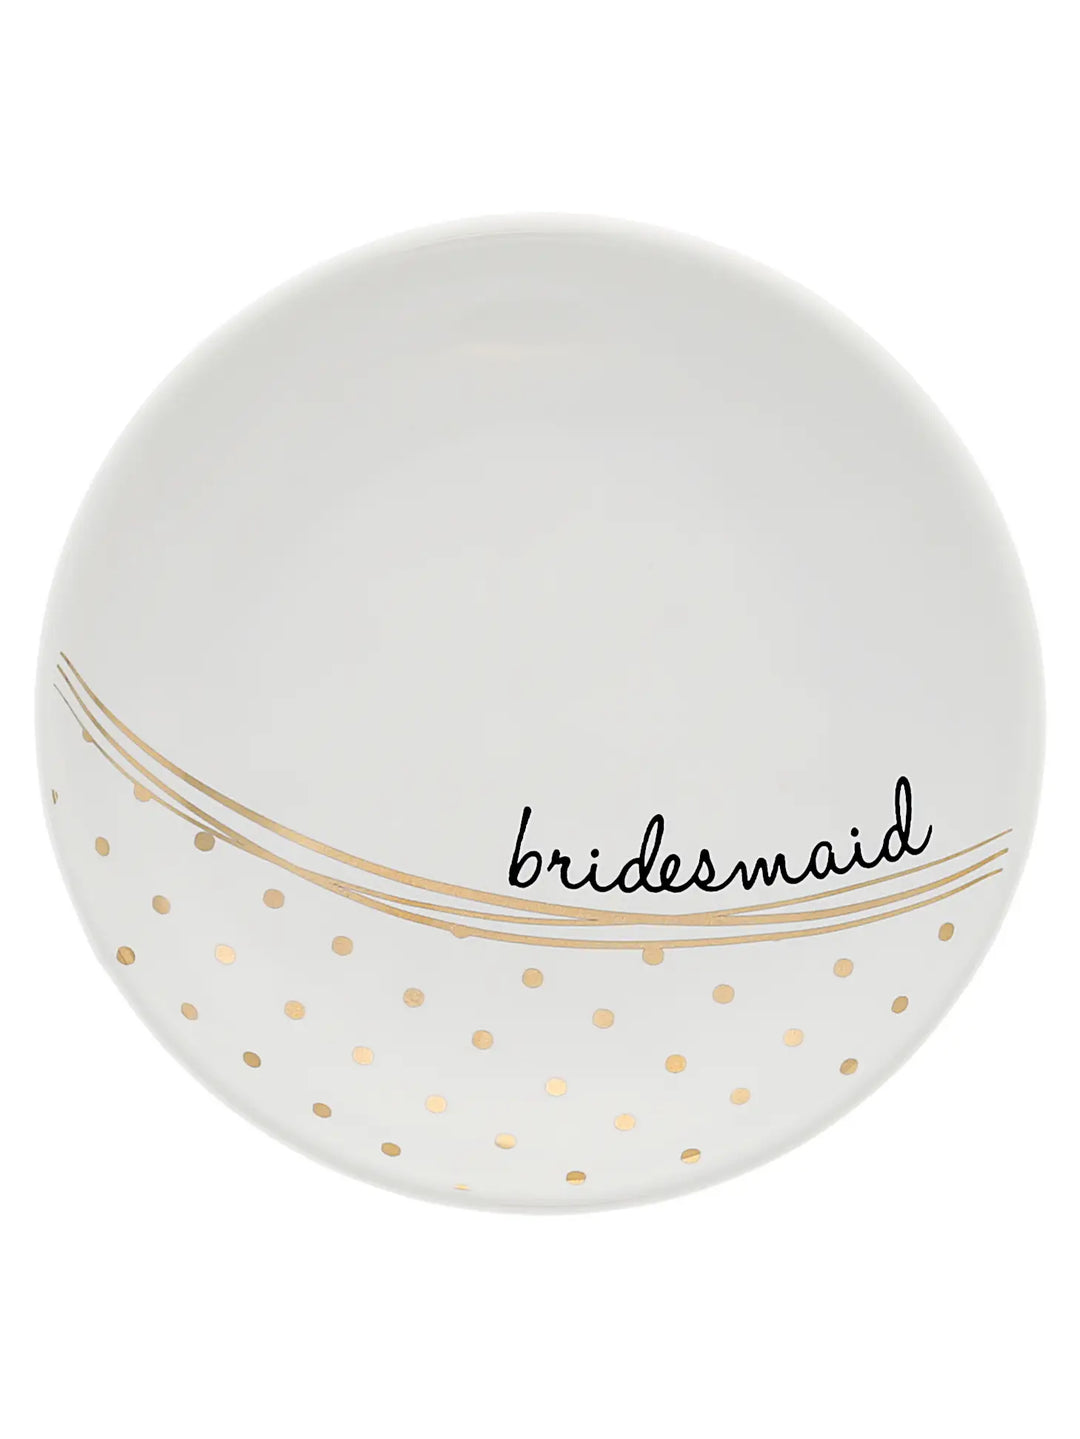 Bridesmaid 4” Keepsake Dish